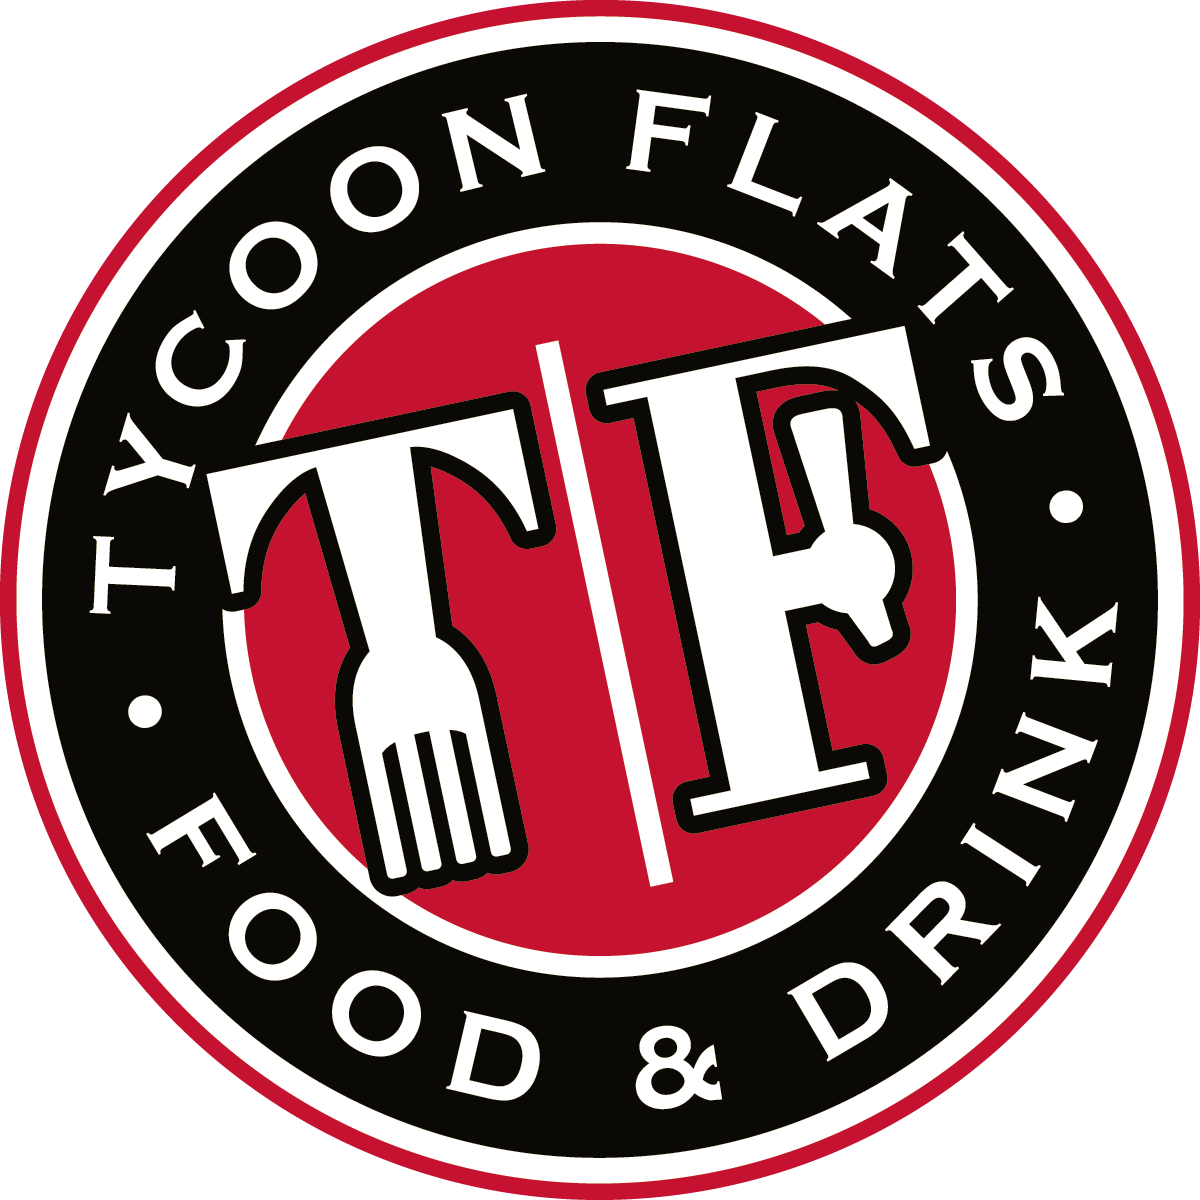 Tycoon Flats No. 2 logo top